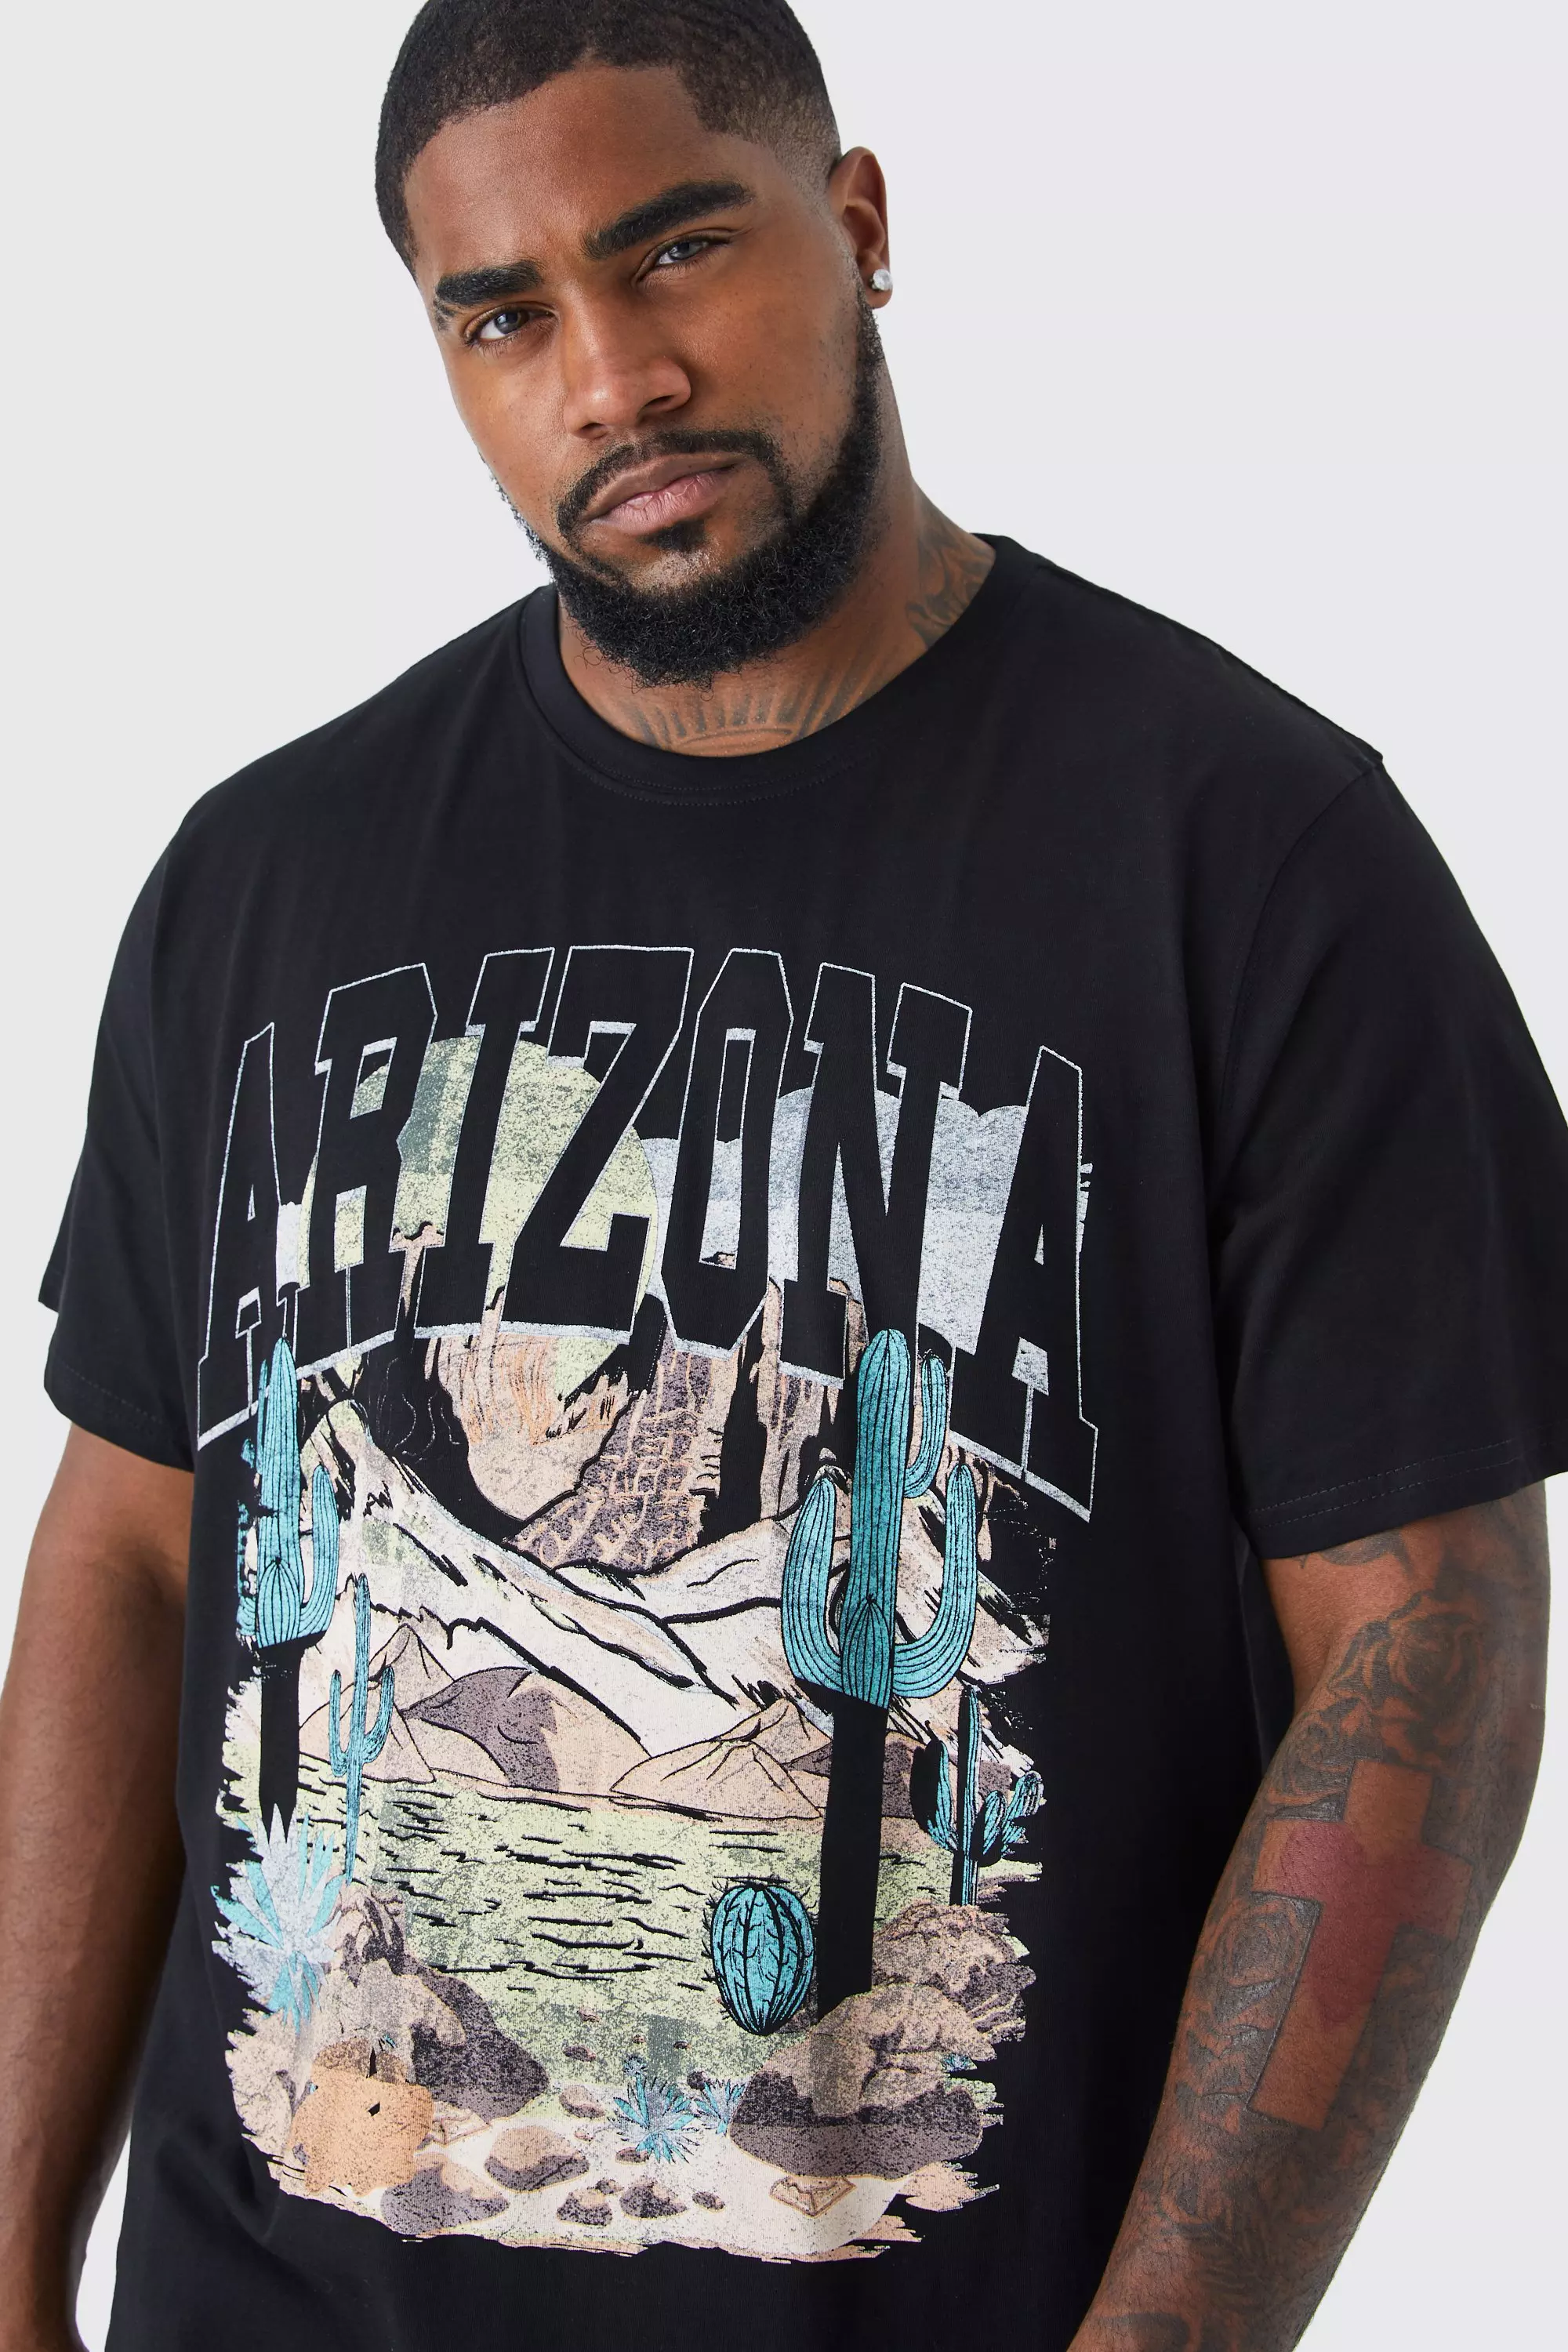 Arizona Men's T-Shirt - Black - XL